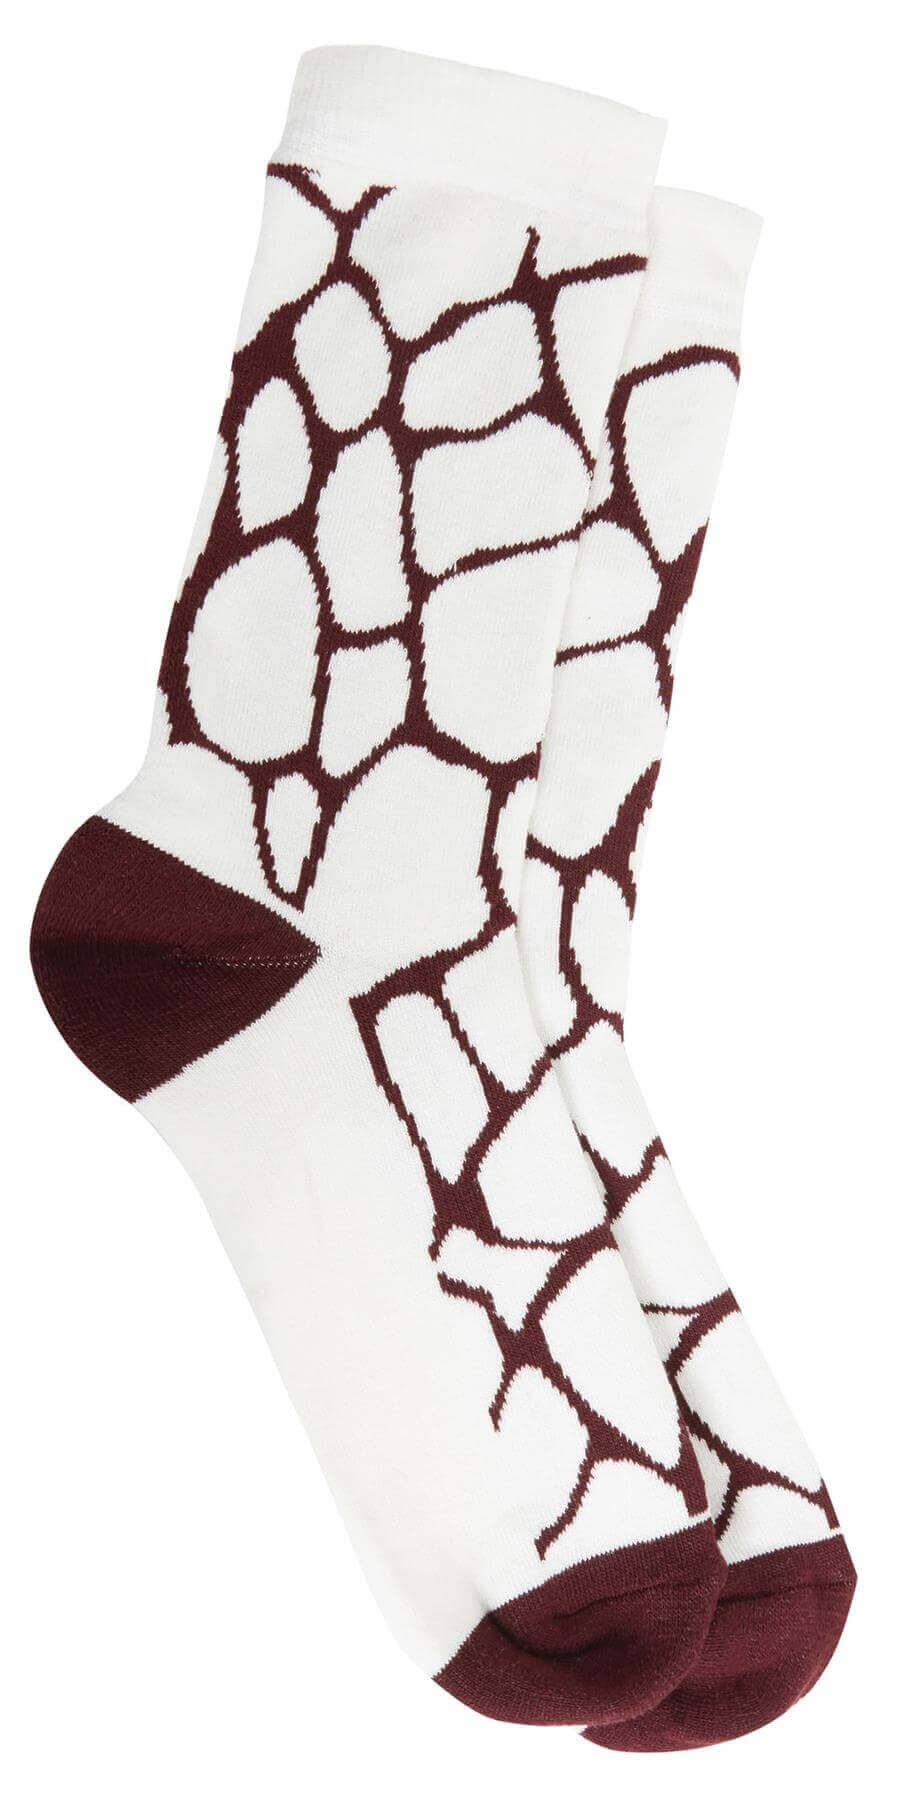 Pack of 6 Women's Animal Print Boot Socks, Summer Walking Hiking Sock  Cotton Rich. Buy Now For £7.00.